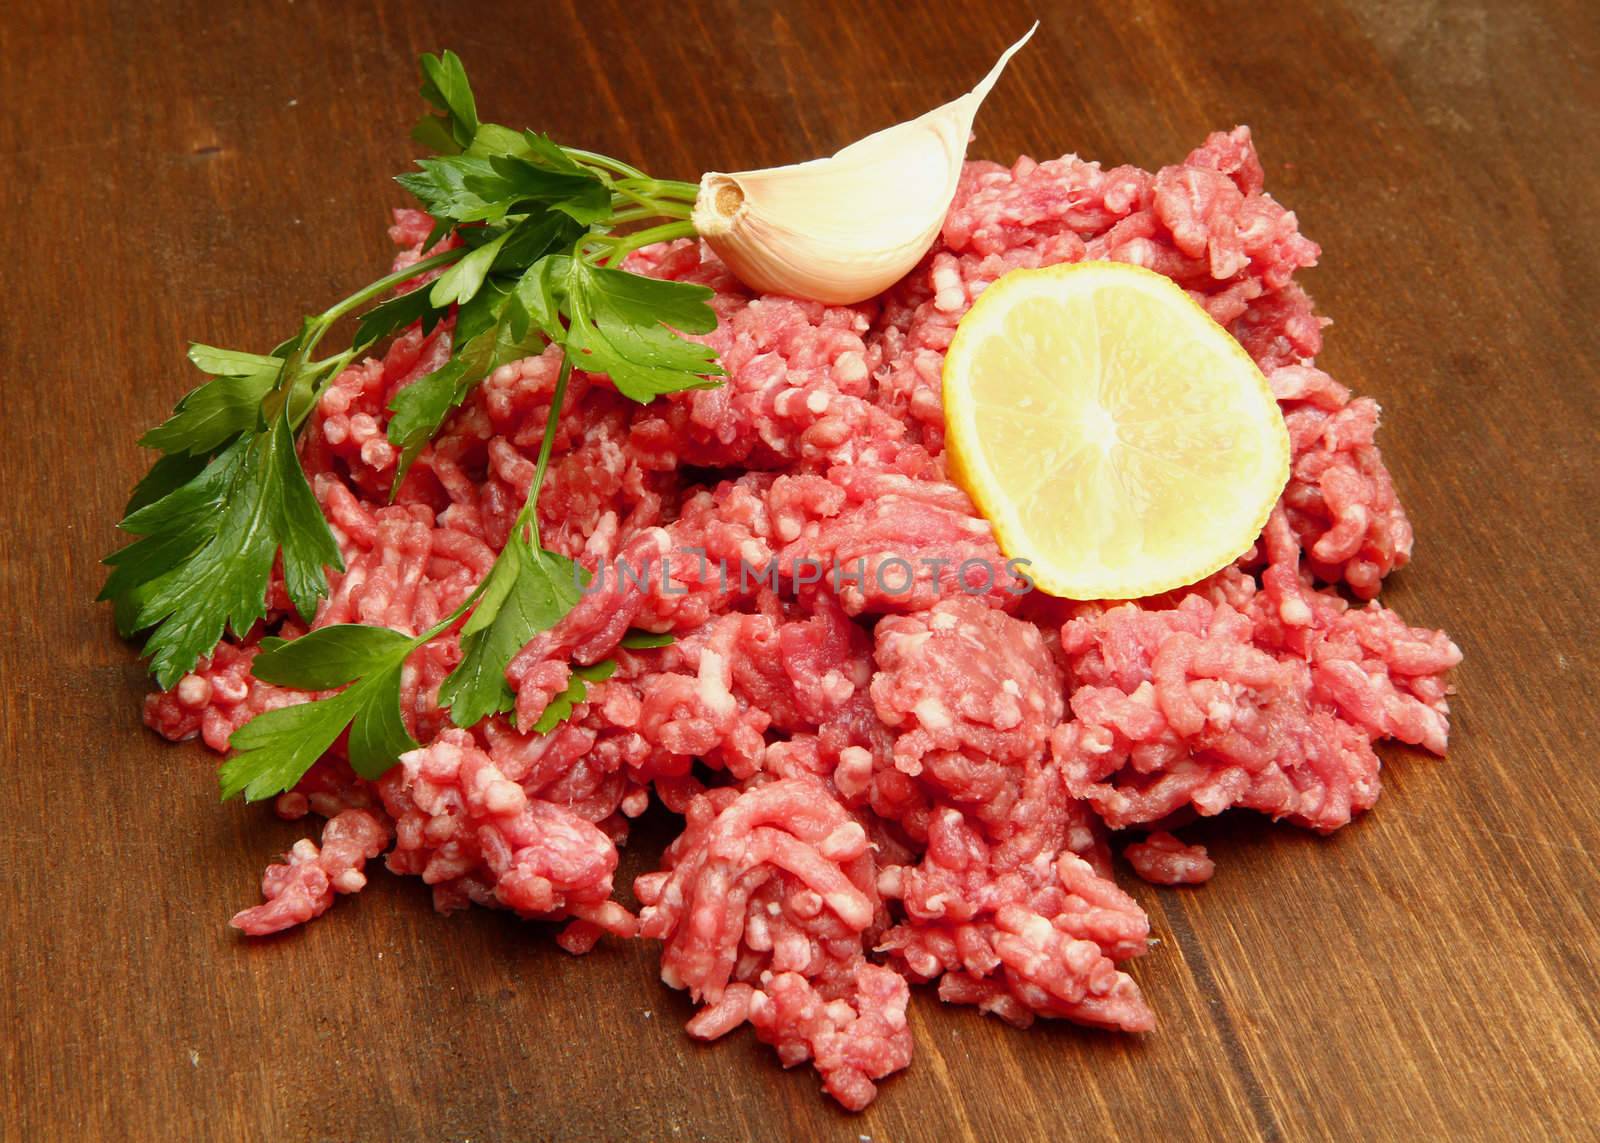 Minced meat by lsantilli